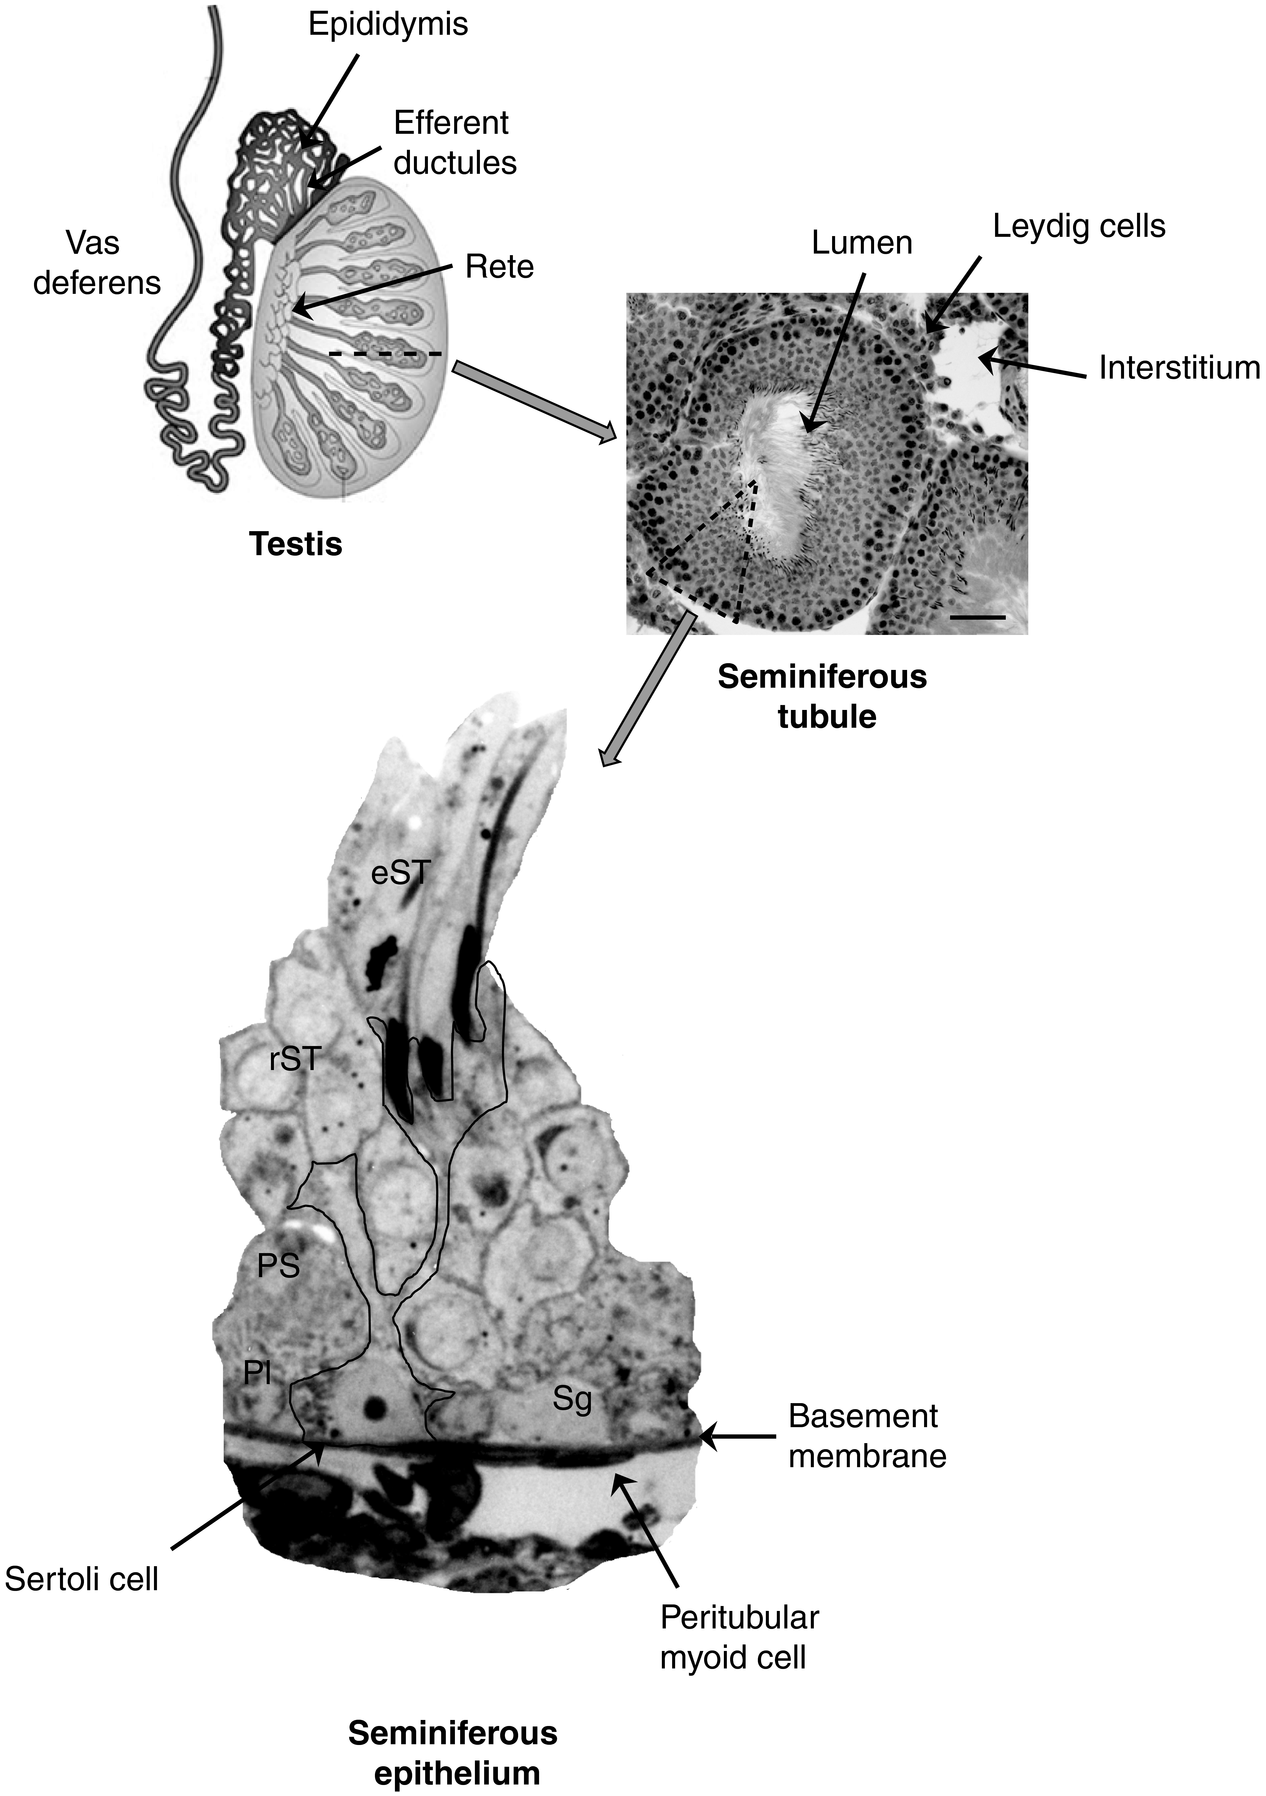 The role of testosterone in spermatogenesis (Chapter 6) - Testosterone